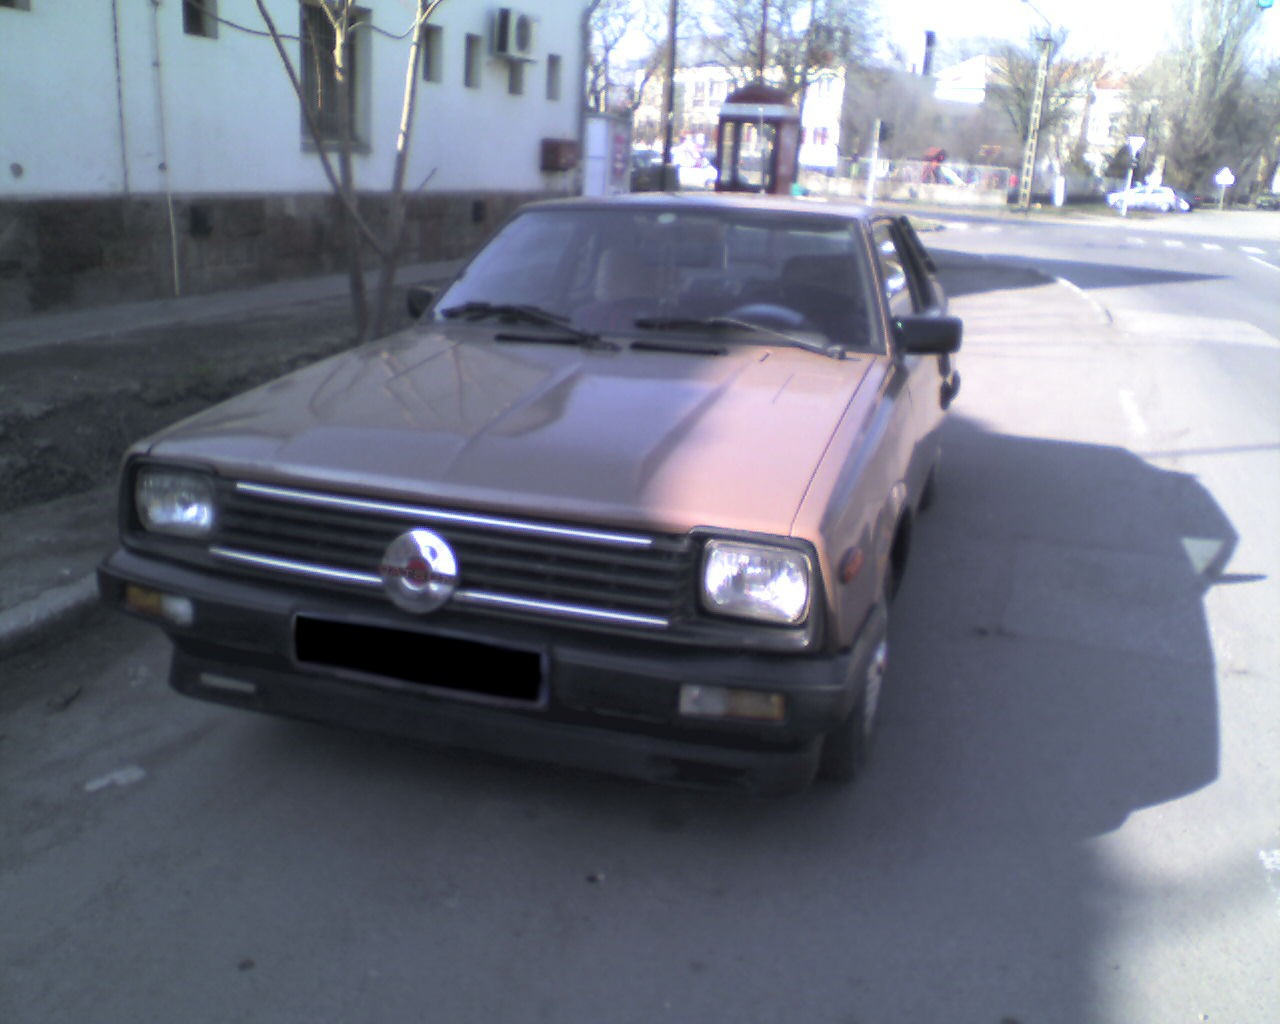 Datsun Z100 front